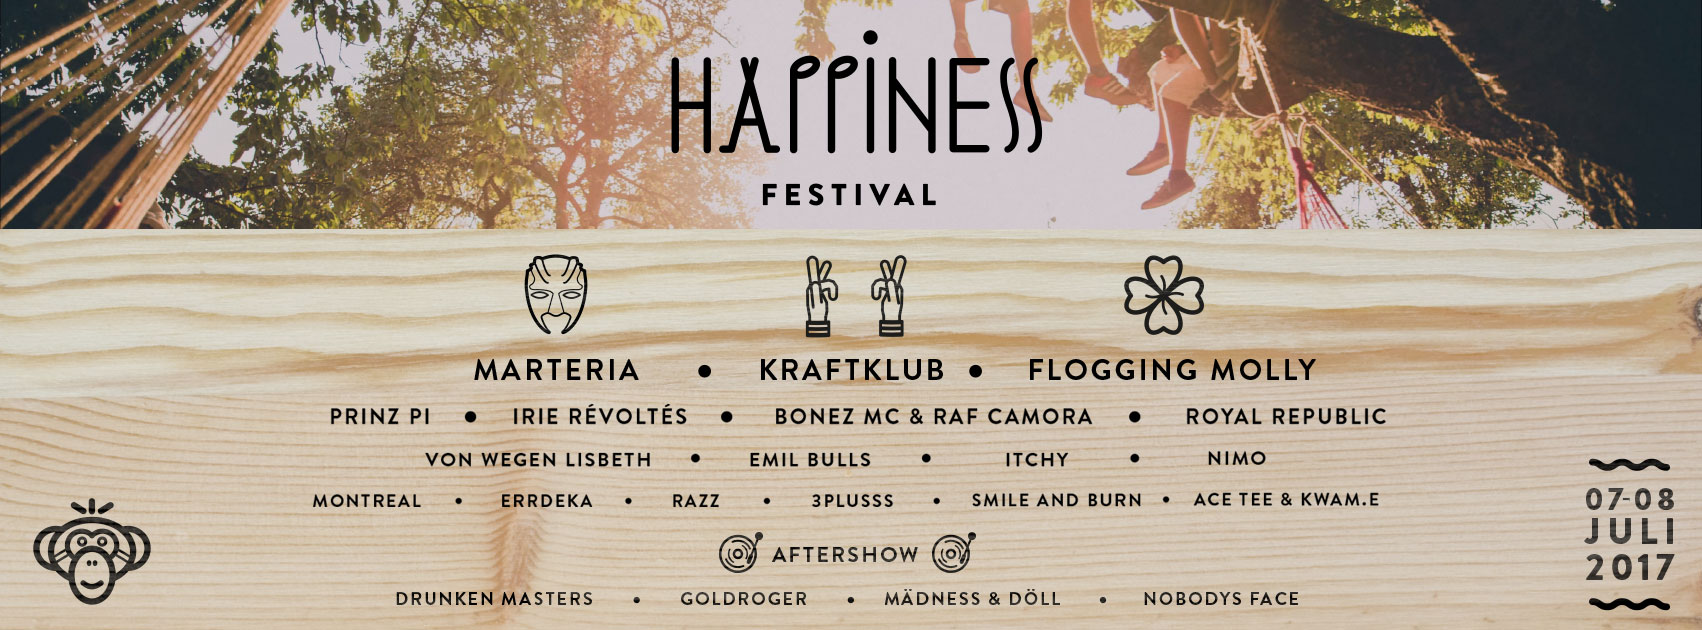 Das Happiness Festival hat seinen dritten Headliner! About Musïc